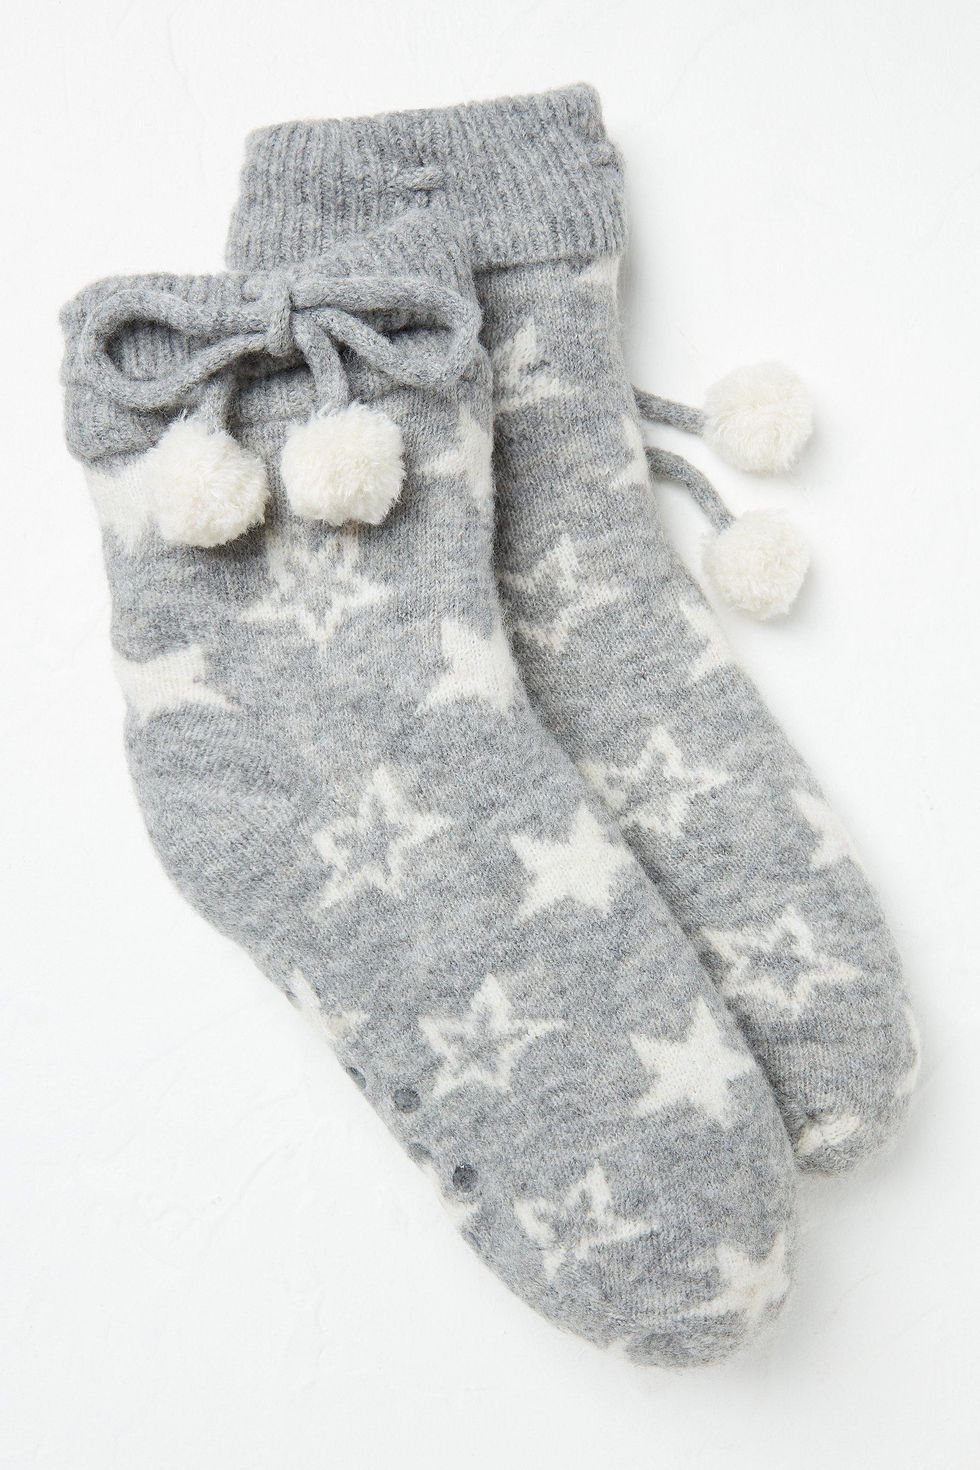 Woolen Winter Socks Women Thicked Warm Home Bedroom Socks Slippers Men Non- Slip Foot Warmer Snow Socks Calcetines Mujer